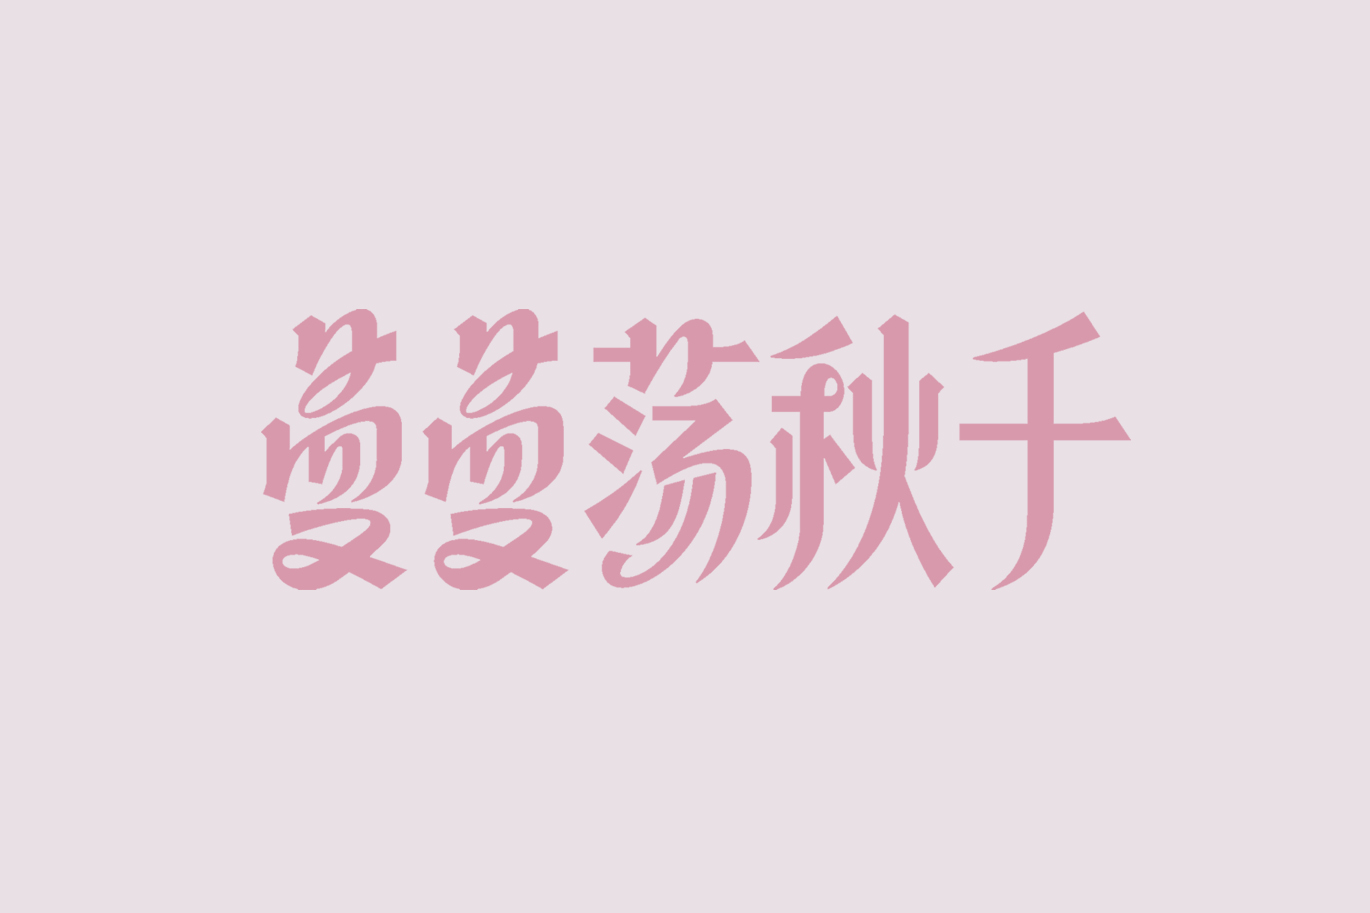 Interesting Chinese Creative Font Design-A few words carry a deep maternal love.